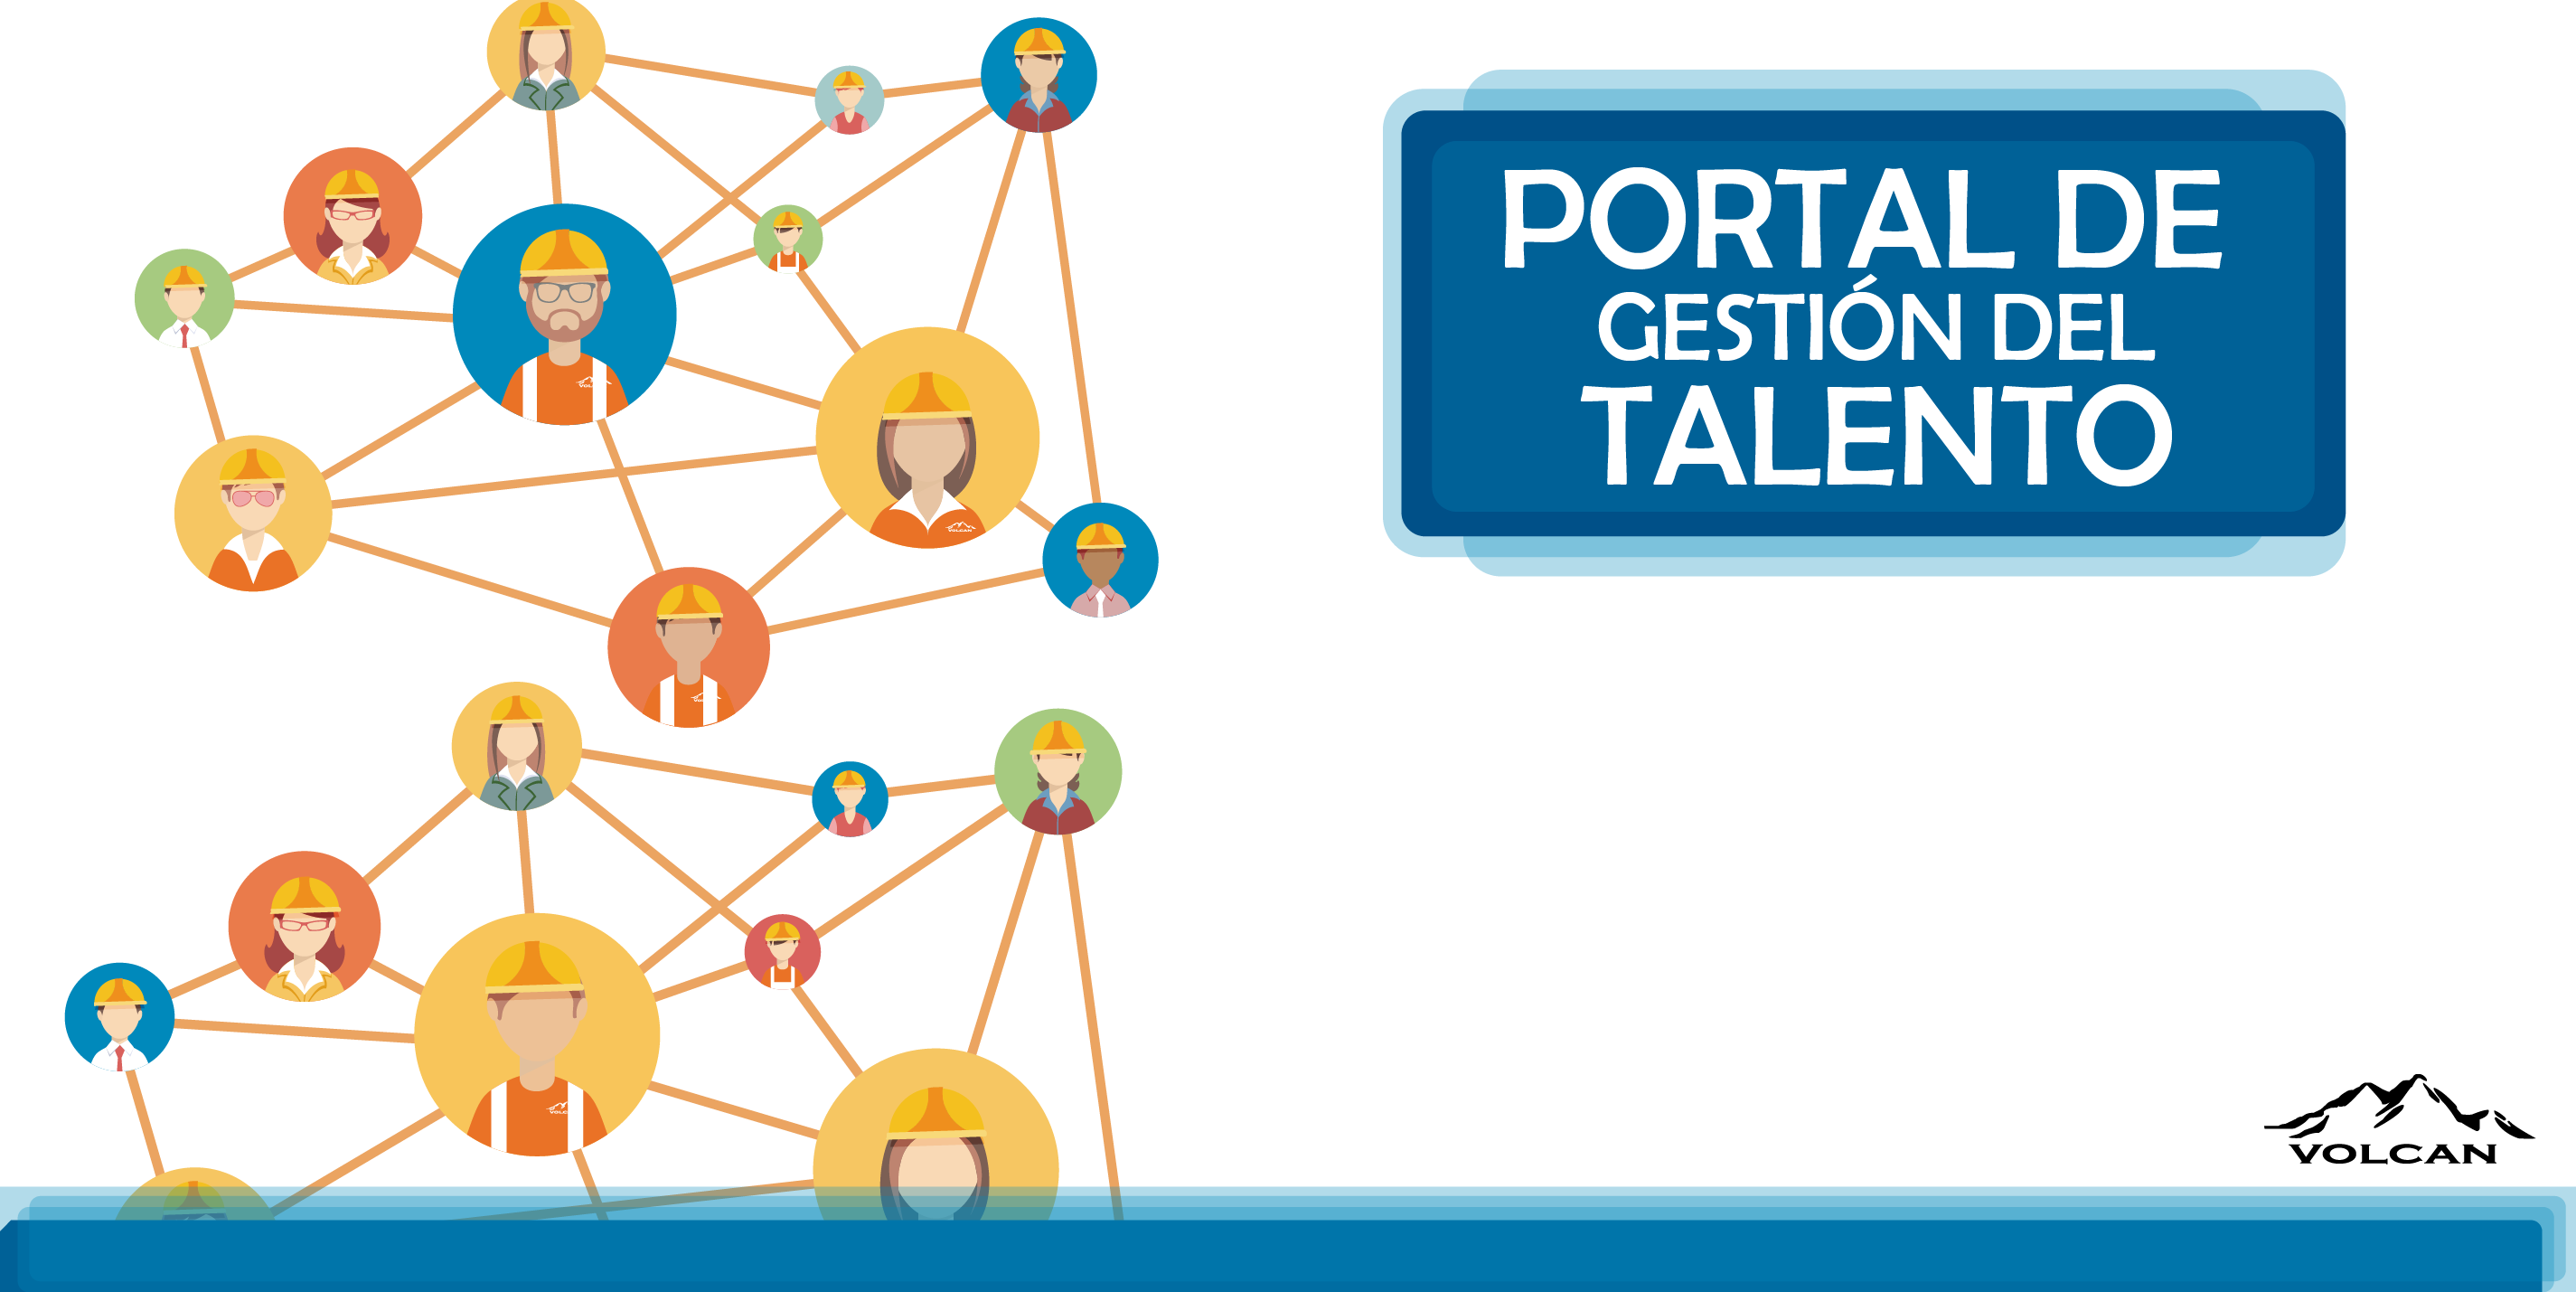 Portal de Gestion del talento - Portada-07.png  by Rafael